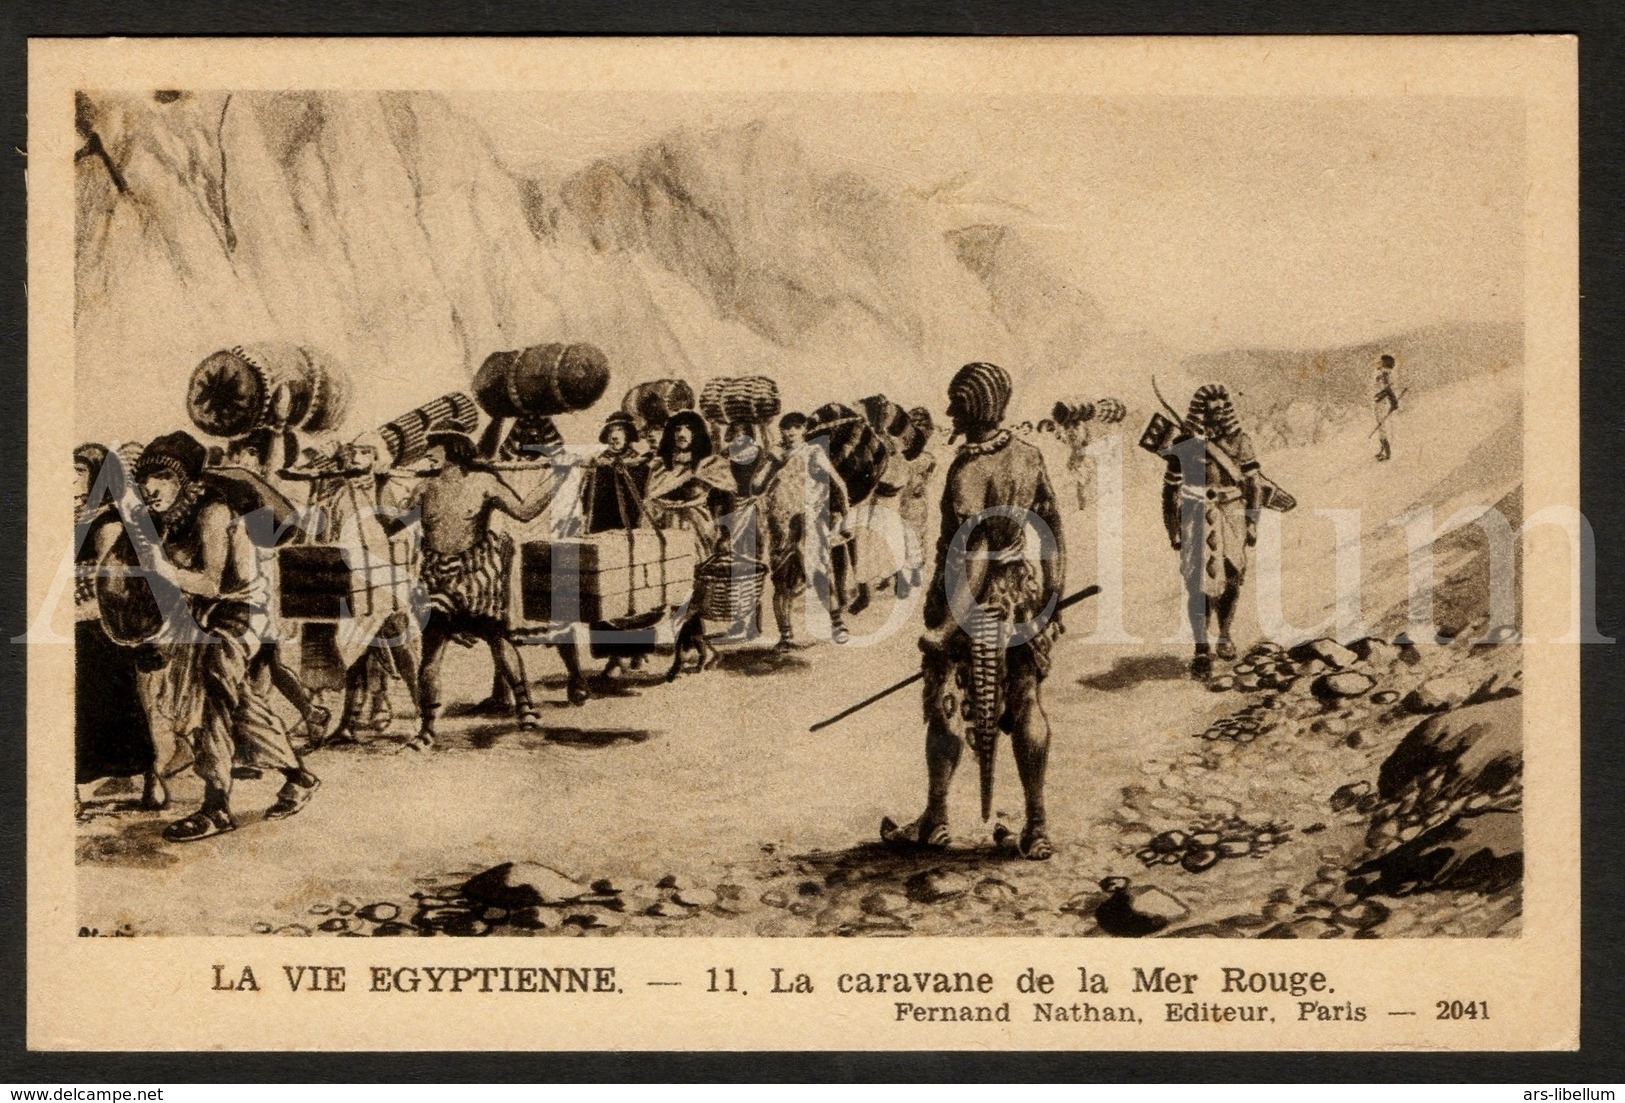 Postcard / CPA / Fernand Nathan / Unused / La Vie Egyptienne / La Caravane De La Mer Rouge / 11 / 2041 - Histoire